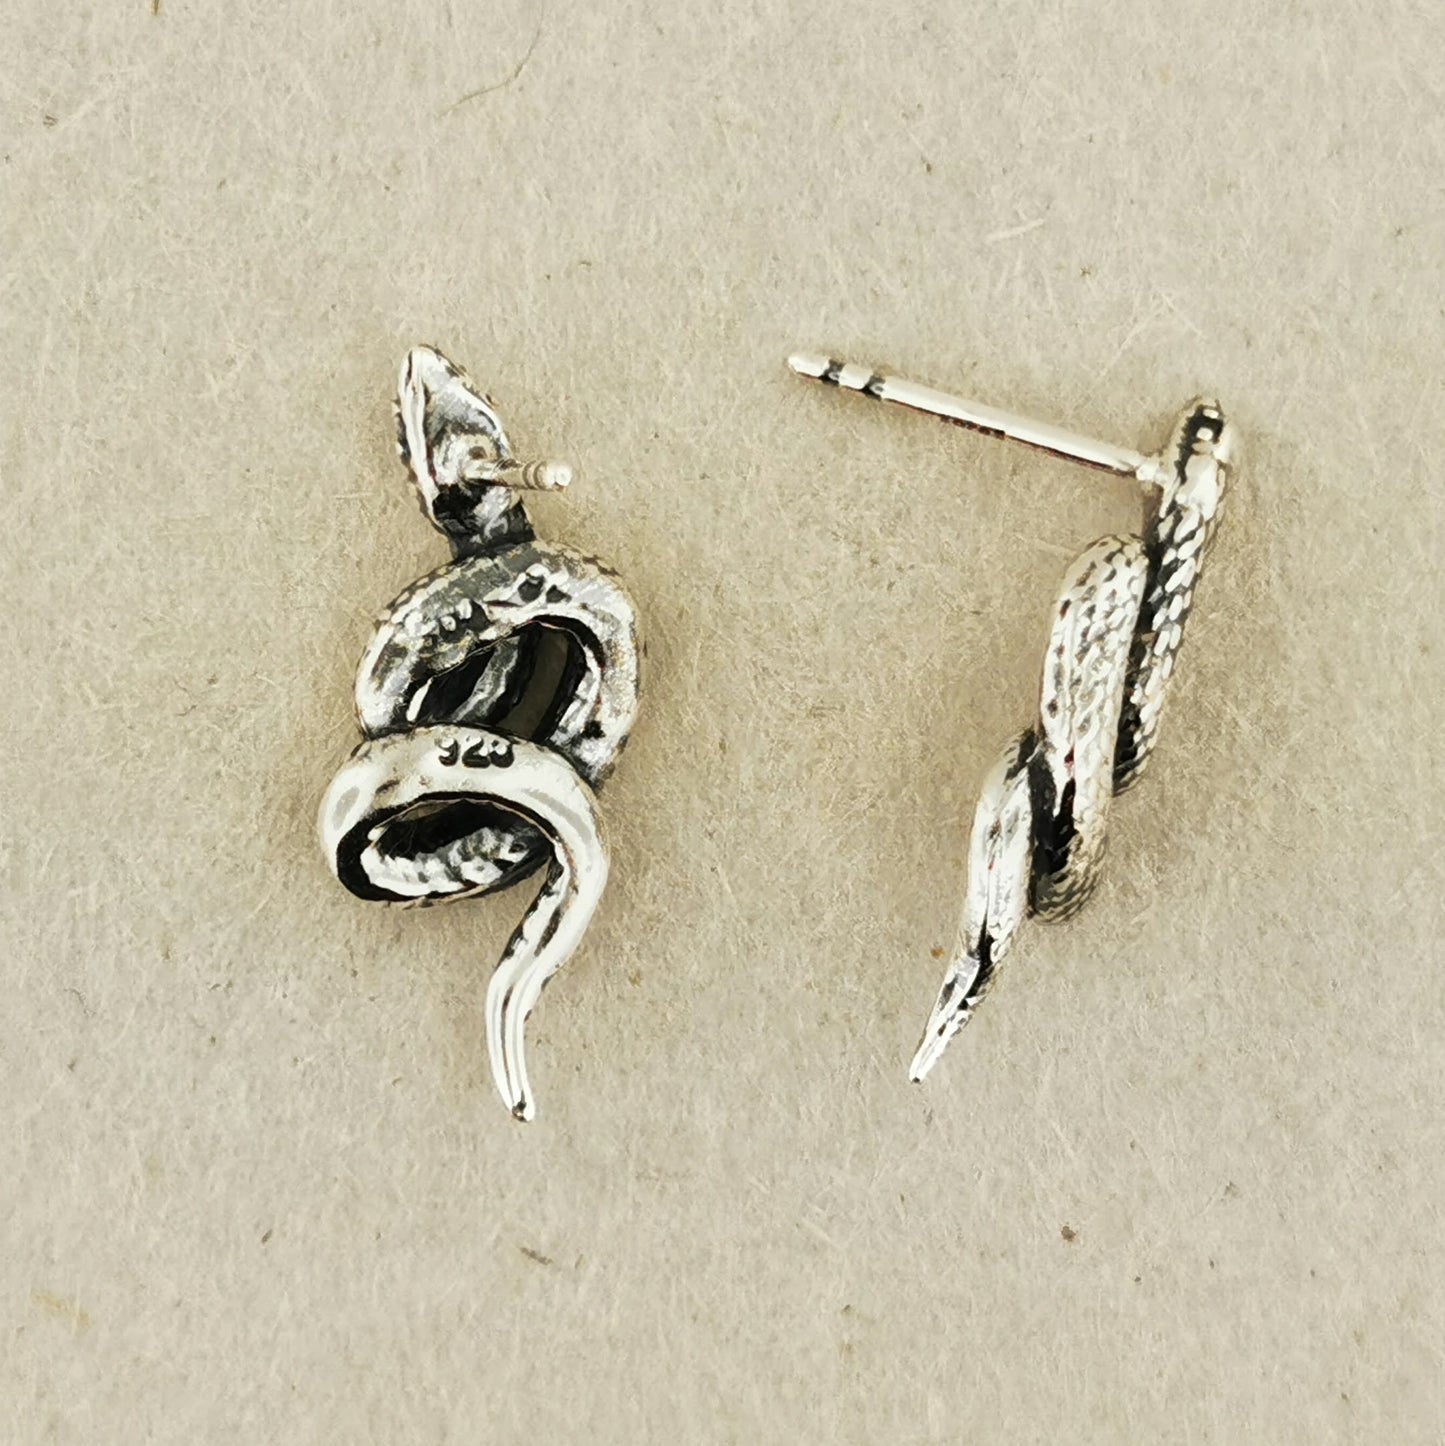 Coiled Snake Stud Earrings in Sterling Silver